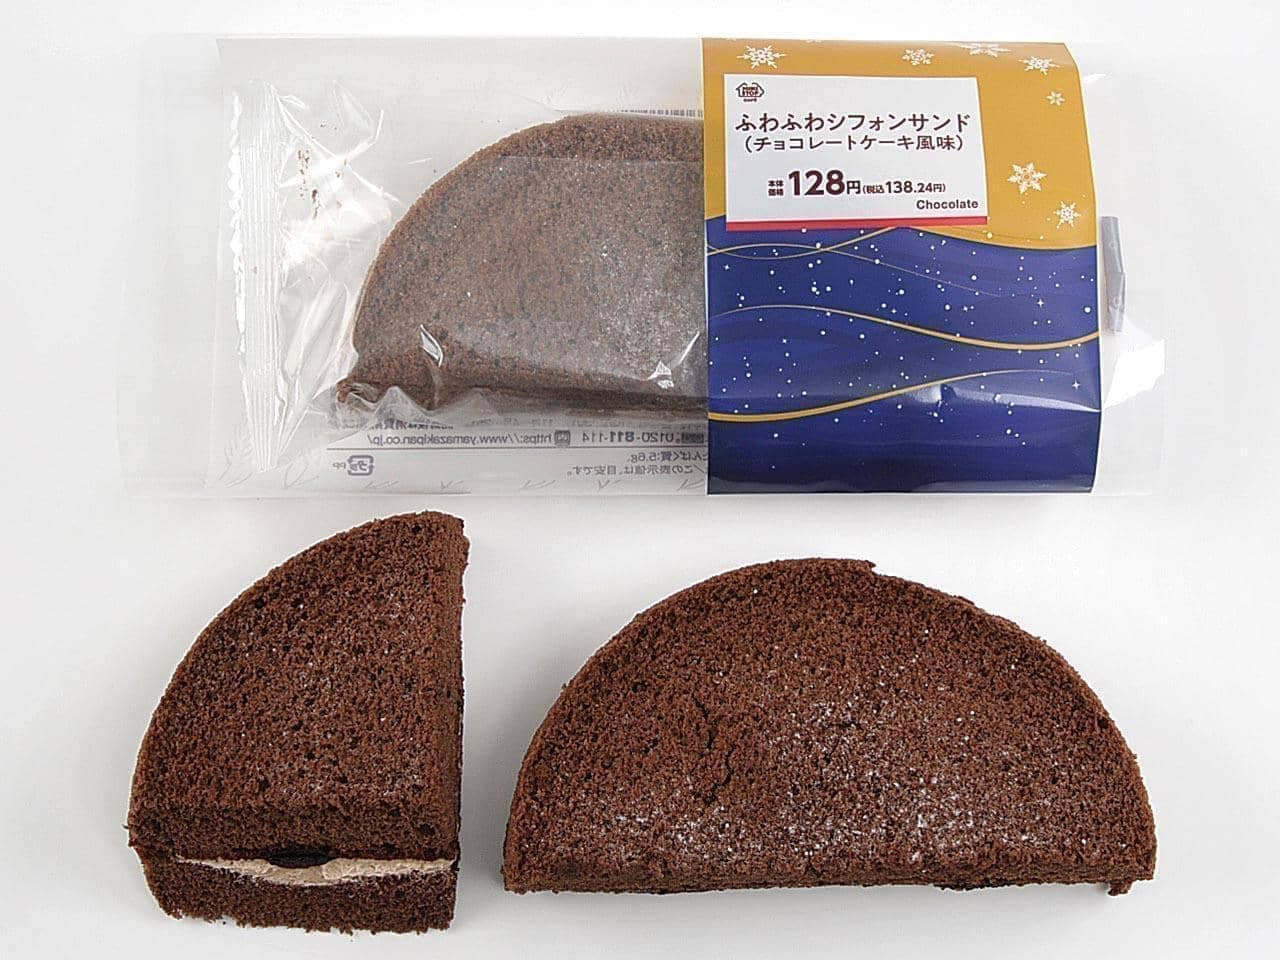 Ministop: Christmas cake-inspired sweet bread